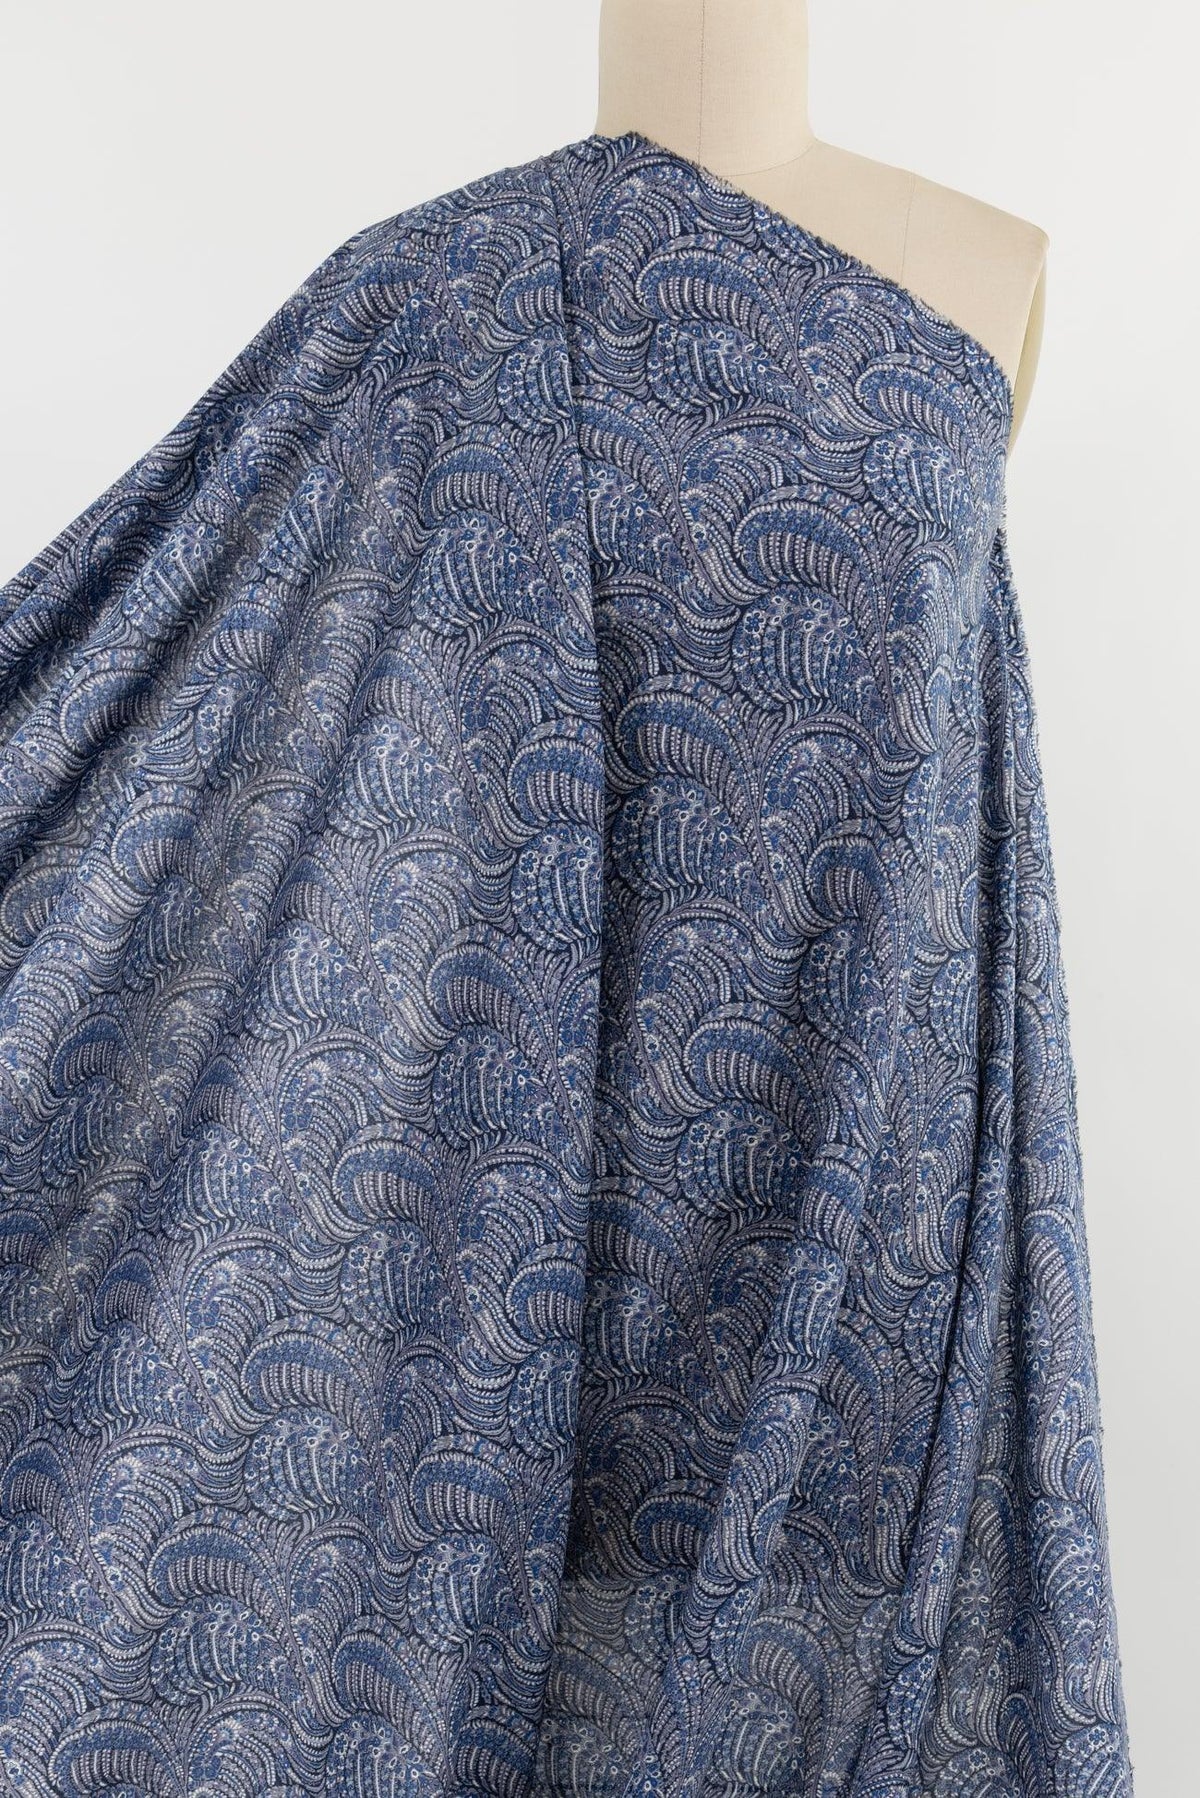 Palladian Blue Paisley Liberty Cotton Woven - Marcy Tilton Fabrics